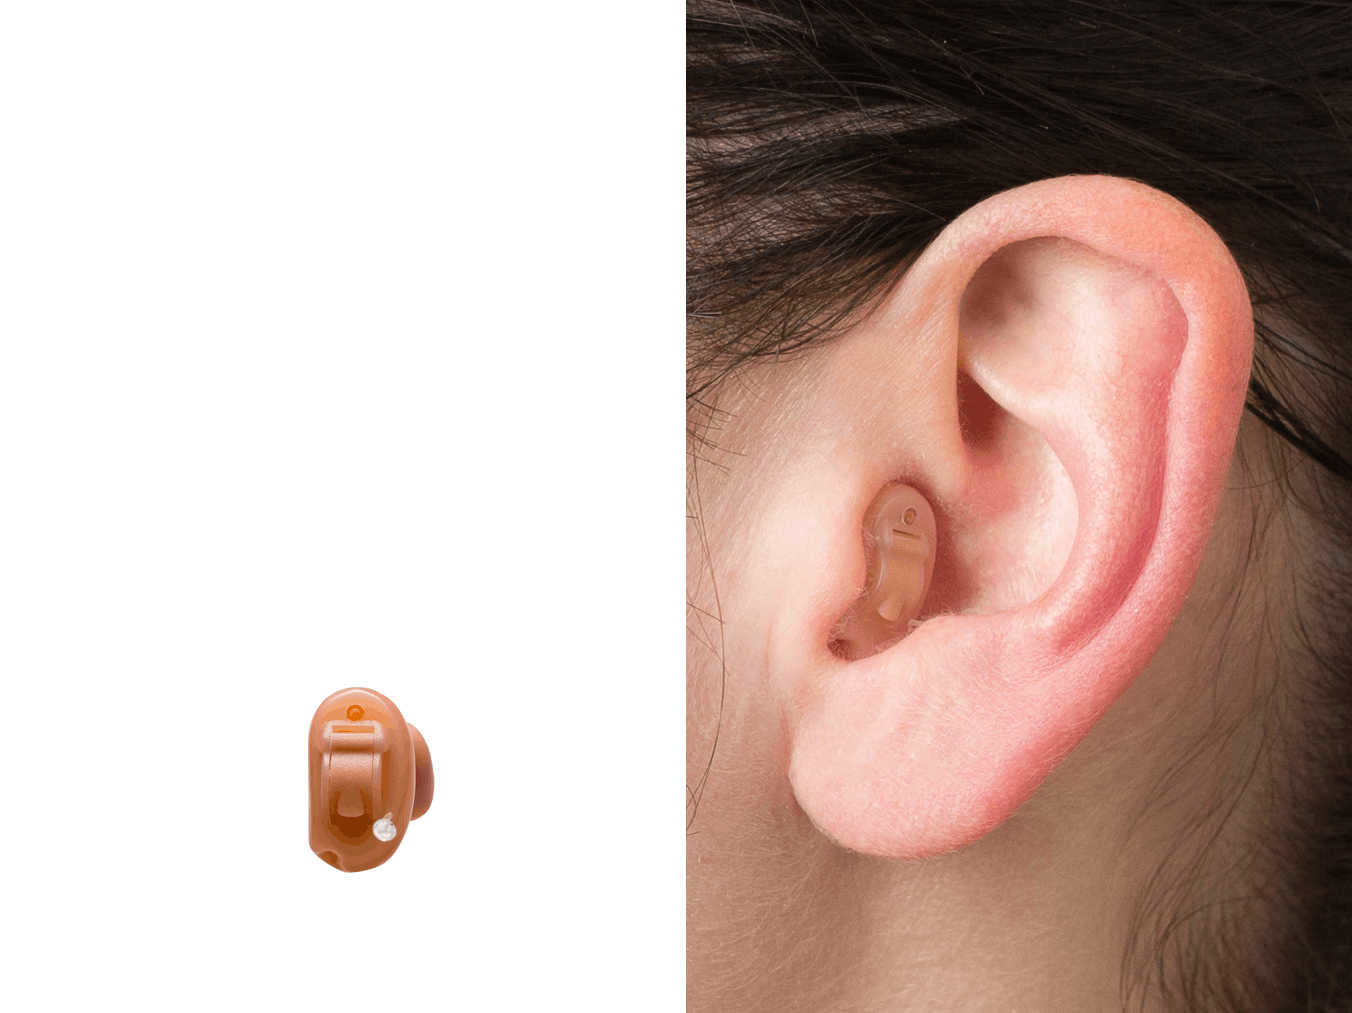 Helix hearing слуховой аппарат. Аппарат слуховой внутриушной конха. «Невидимый» слуховой аппарат (IIC). Слуховой аппарат внутриушной невидимый. Квадробика уши